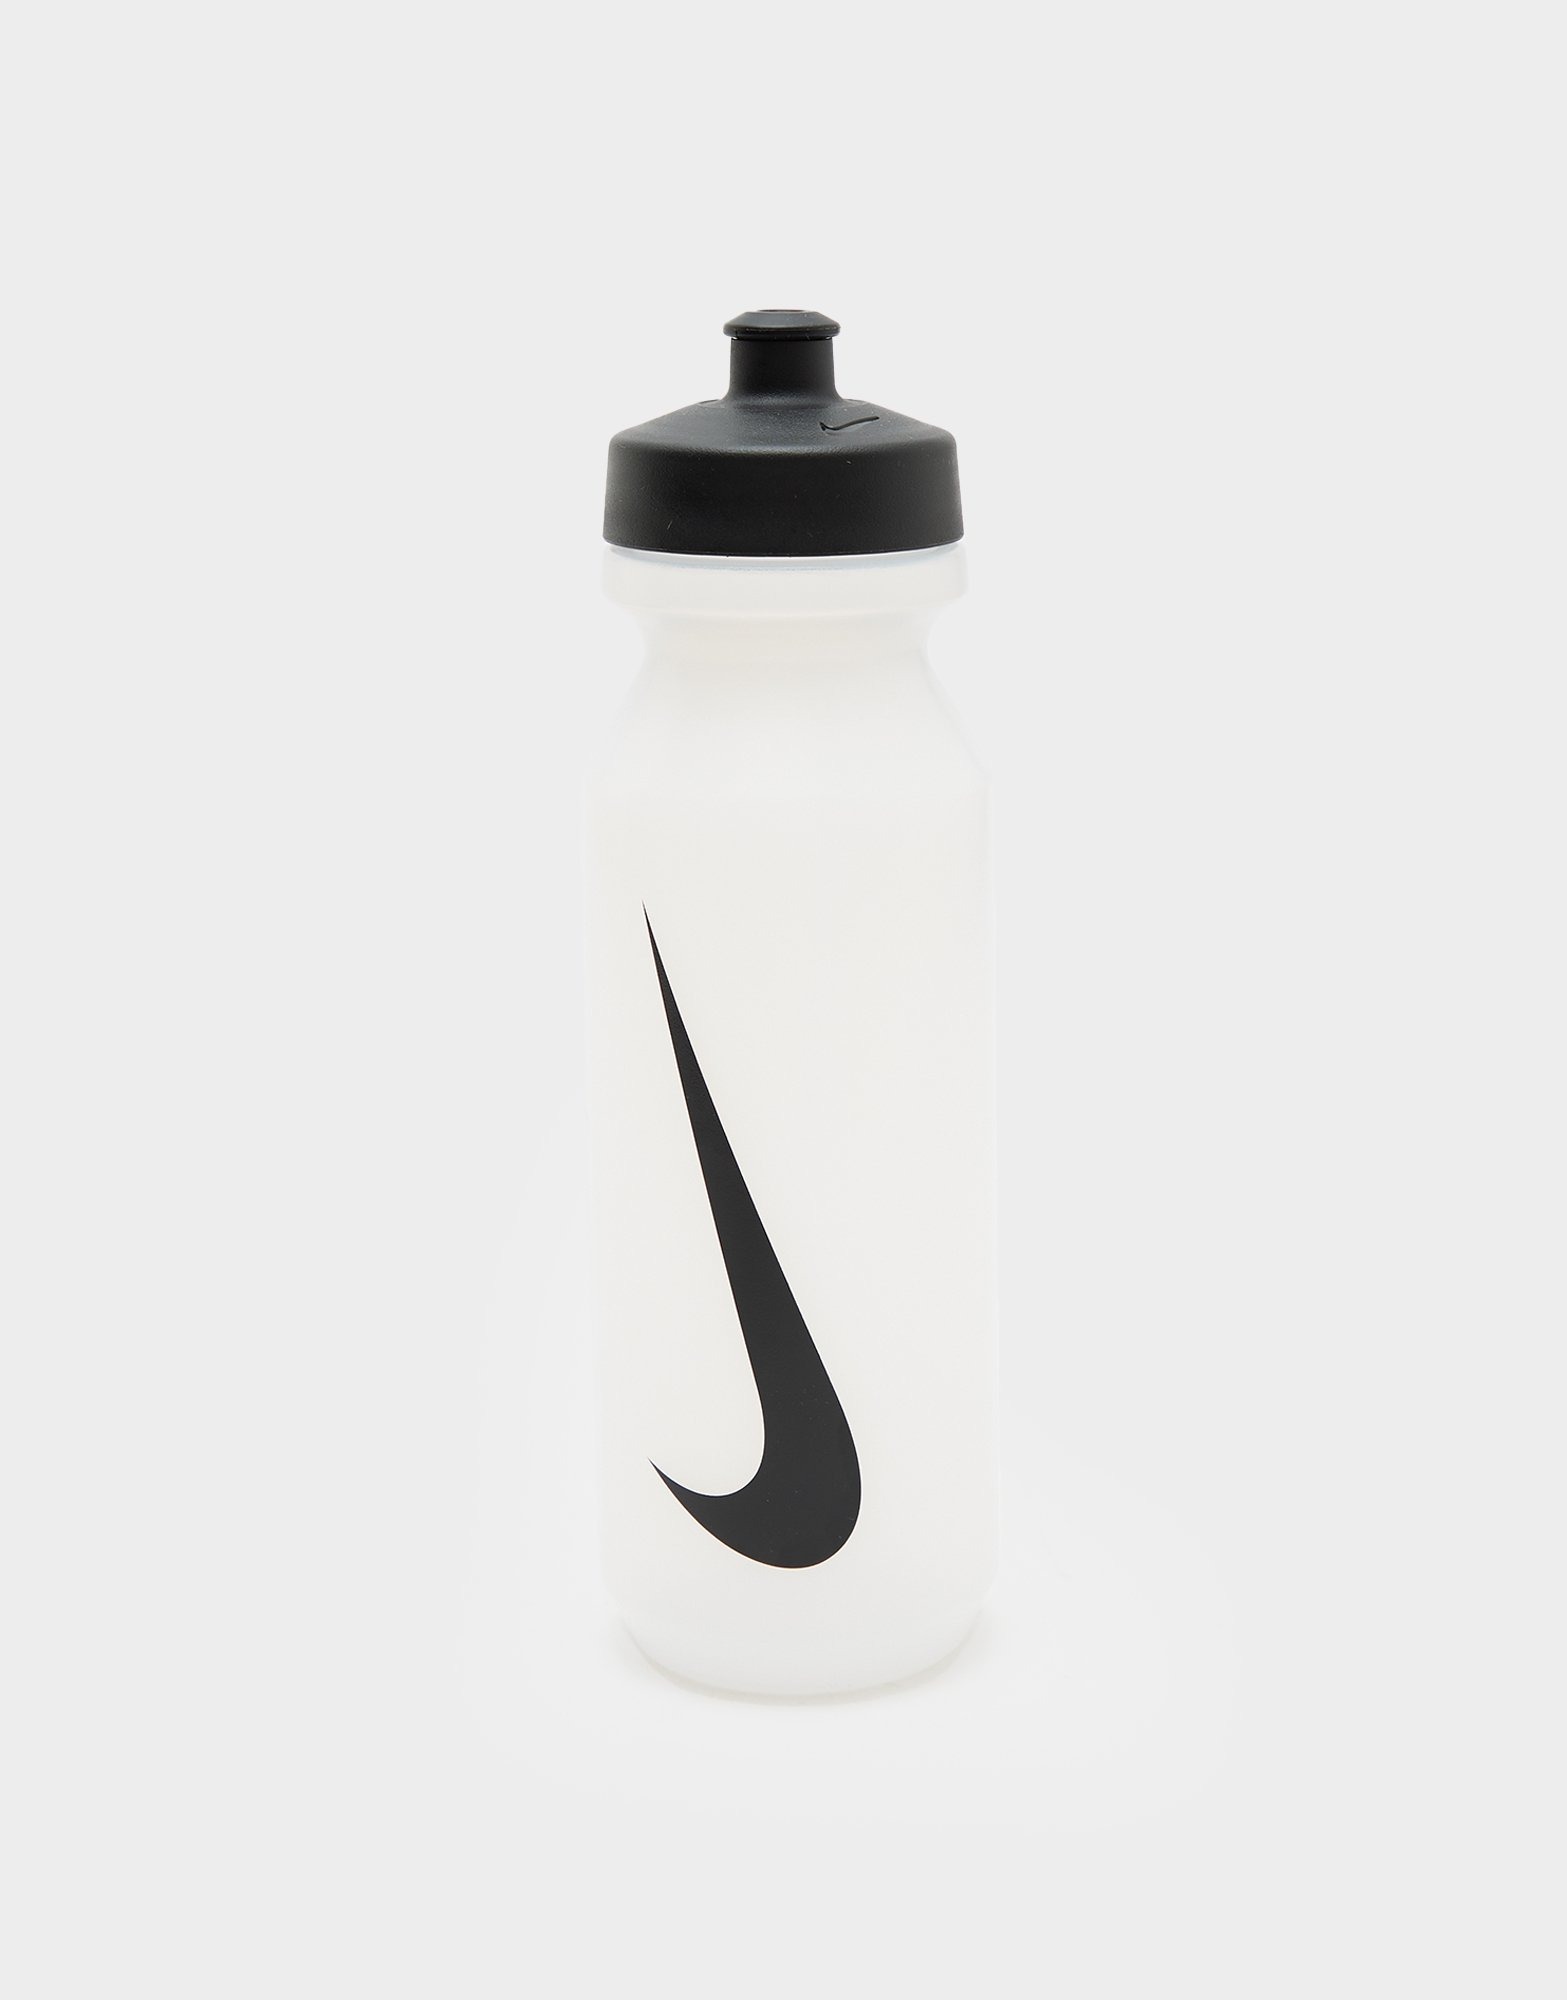 Nike Big Mouth 2.0 32oz Water Bottle Clear/Black